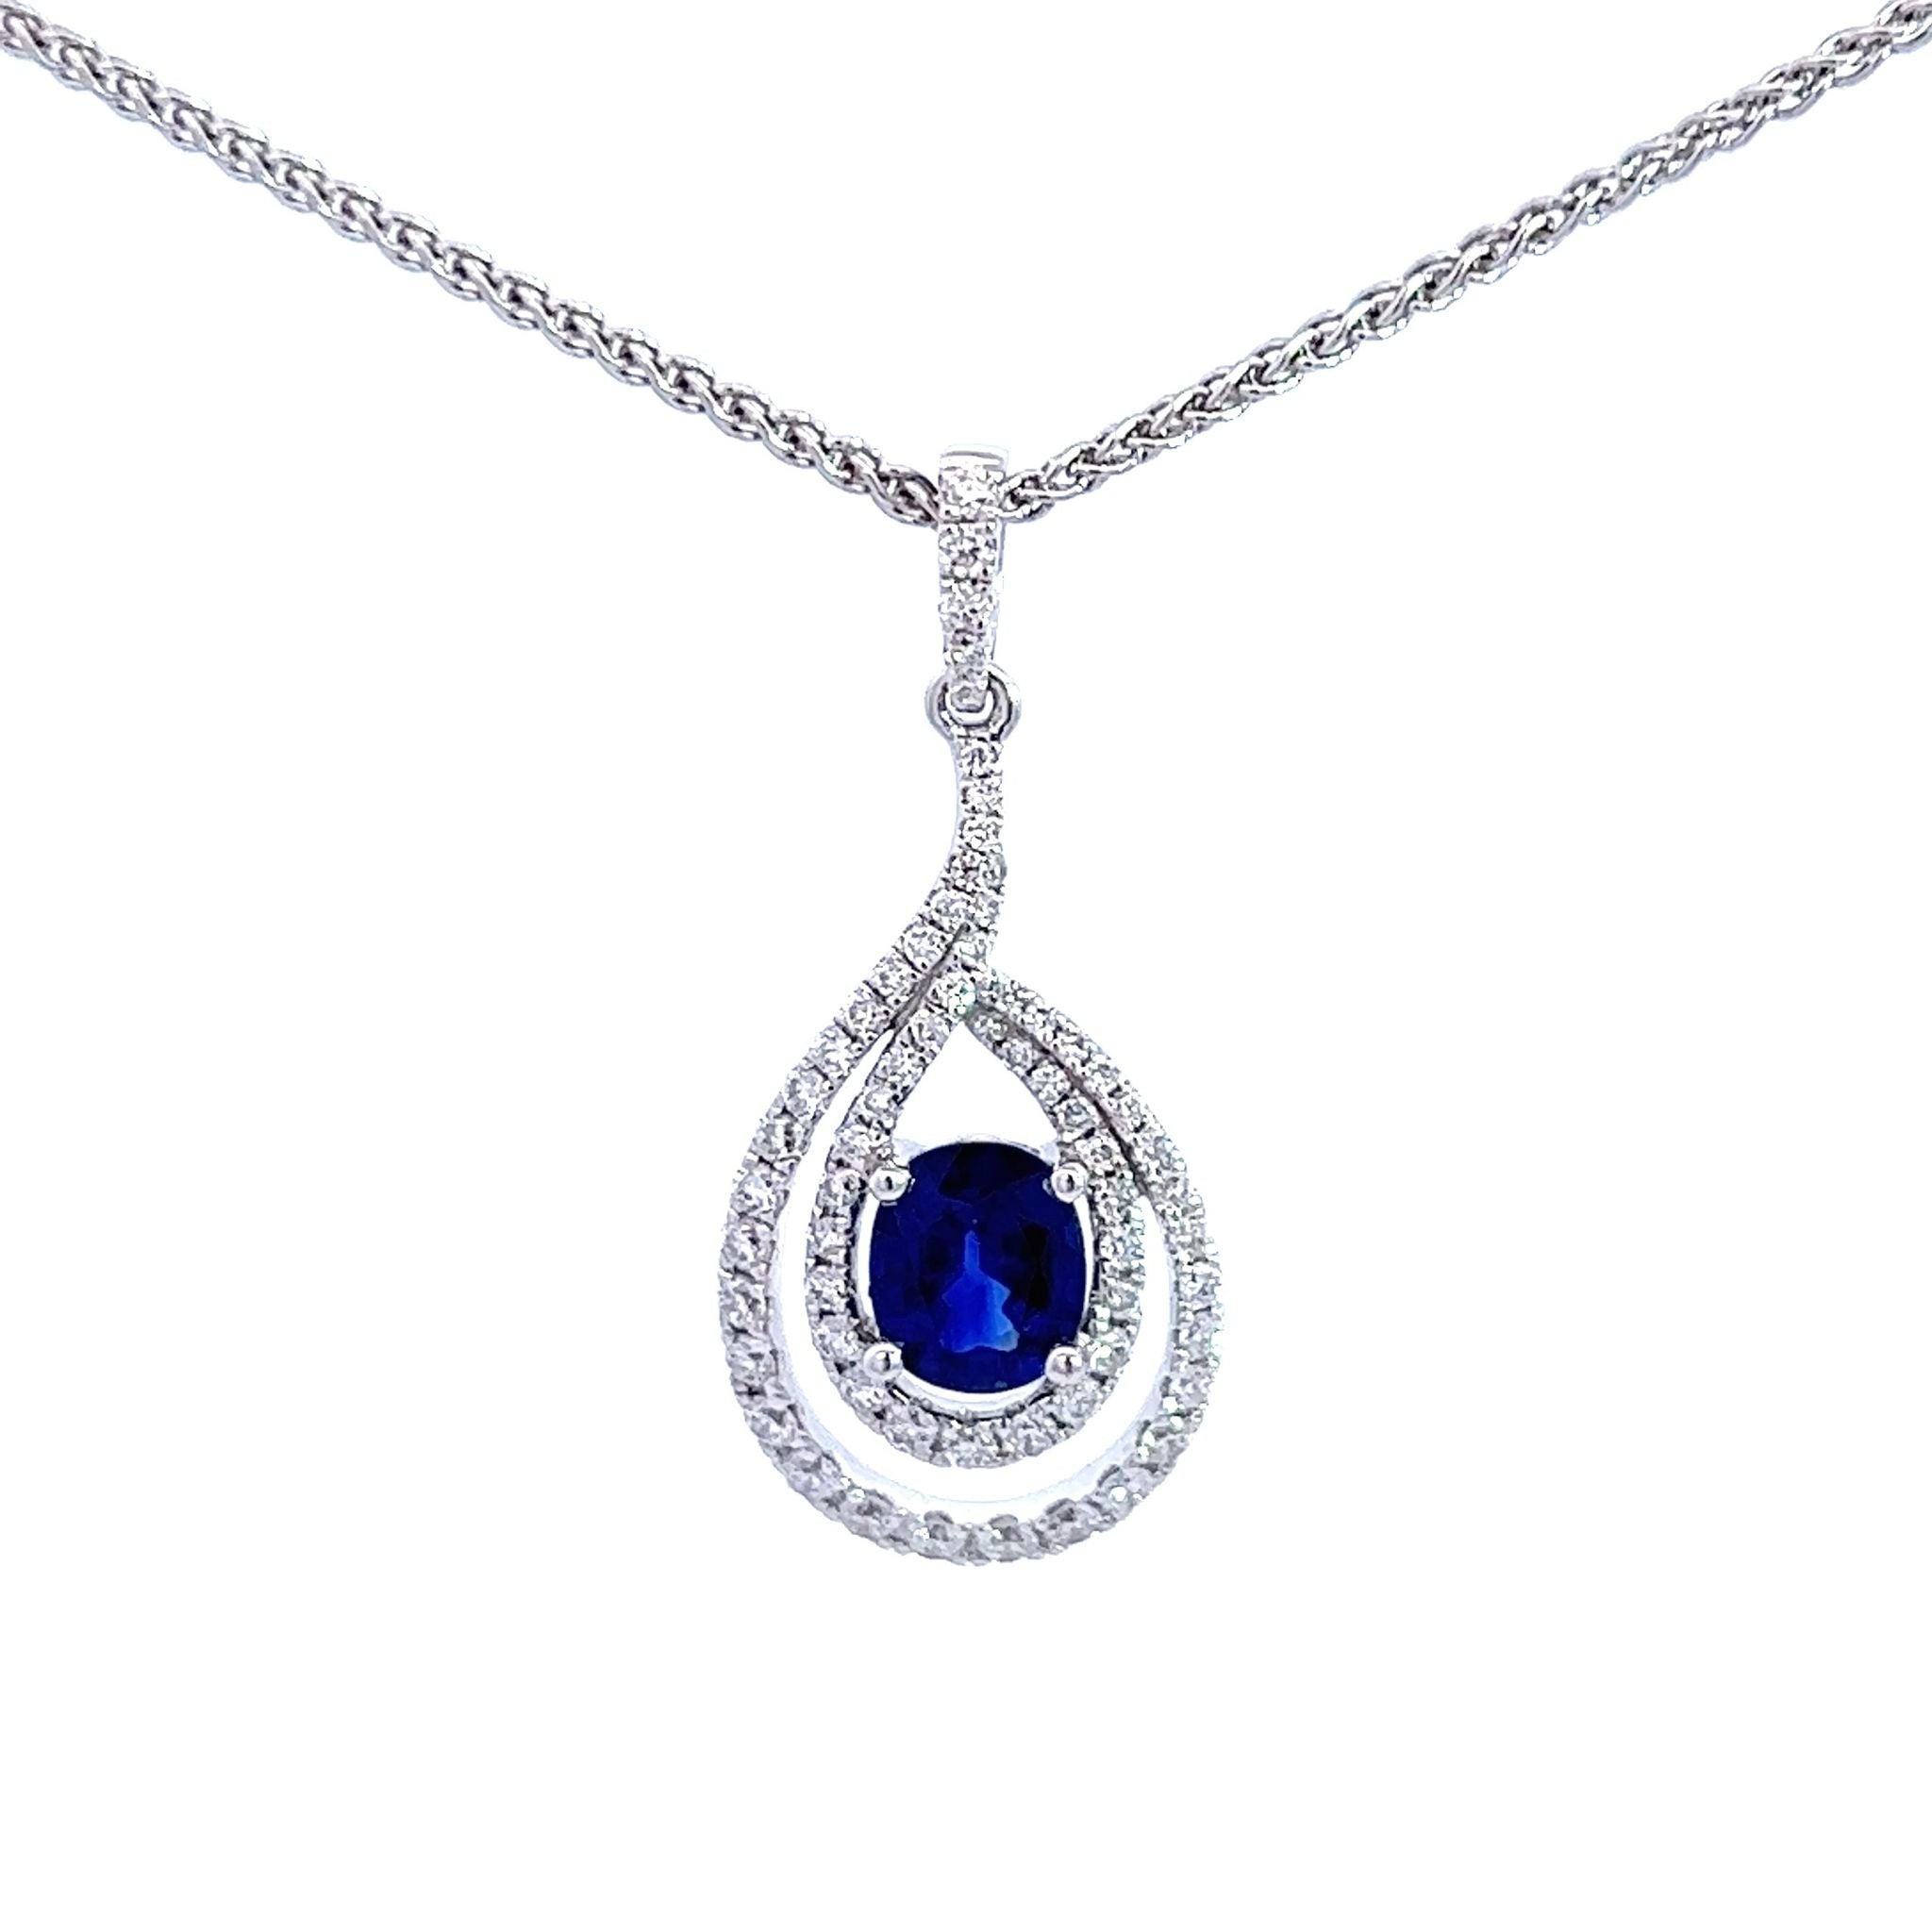 Diana Porter 18ct white gold three diamond pendant necklace